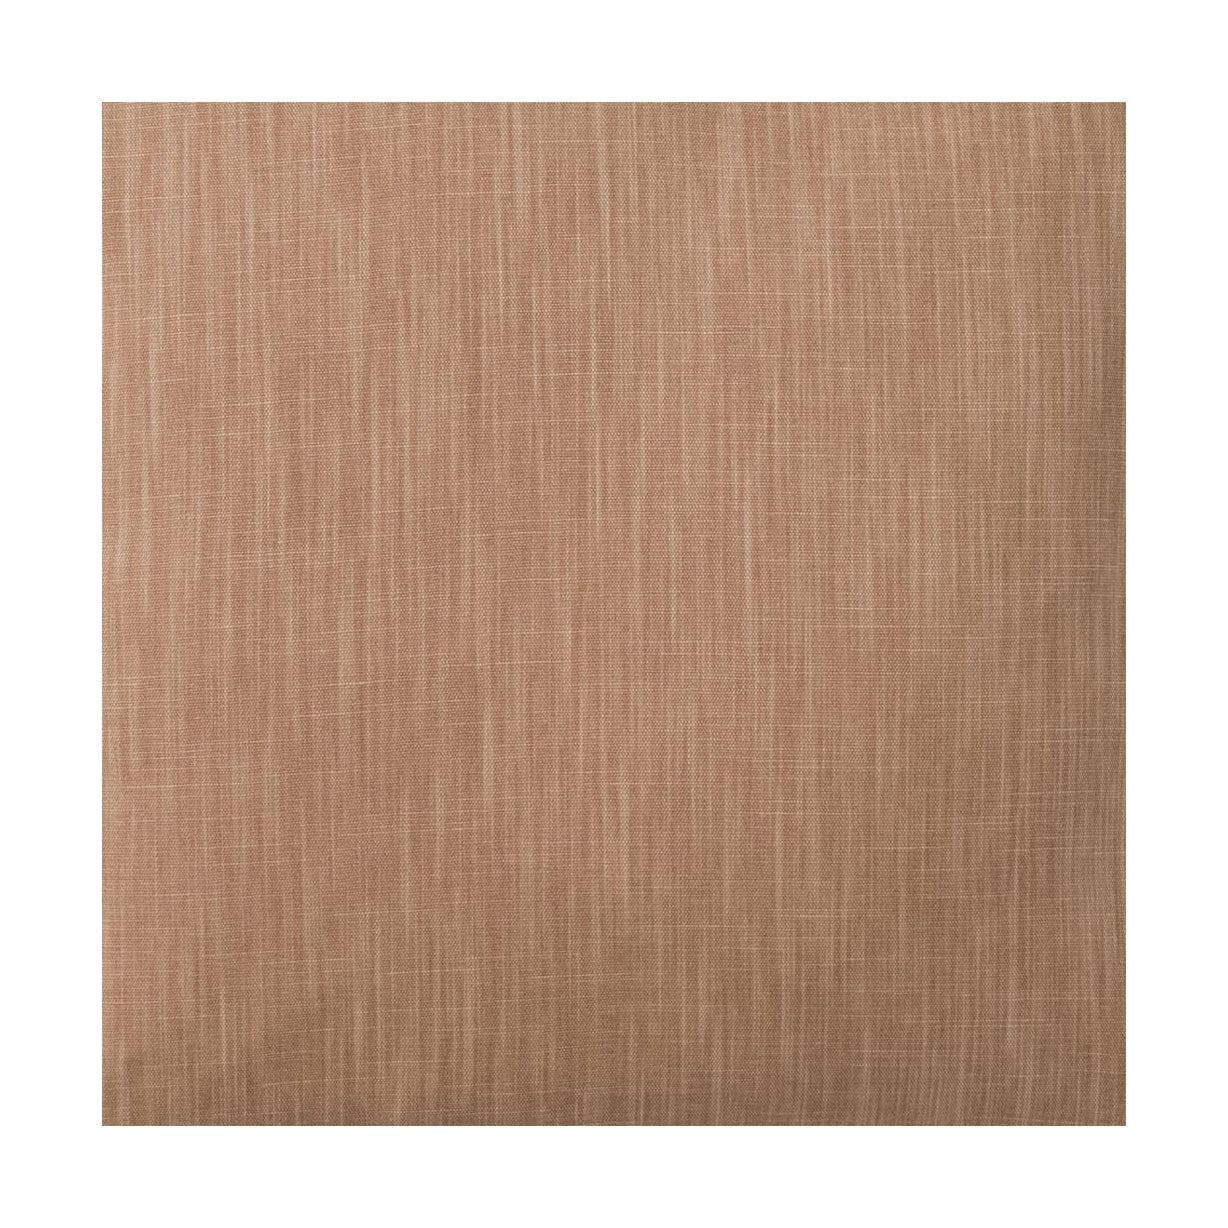 Spira Klotz Fabric Width 150 Cm (Price Per Meter), Rust